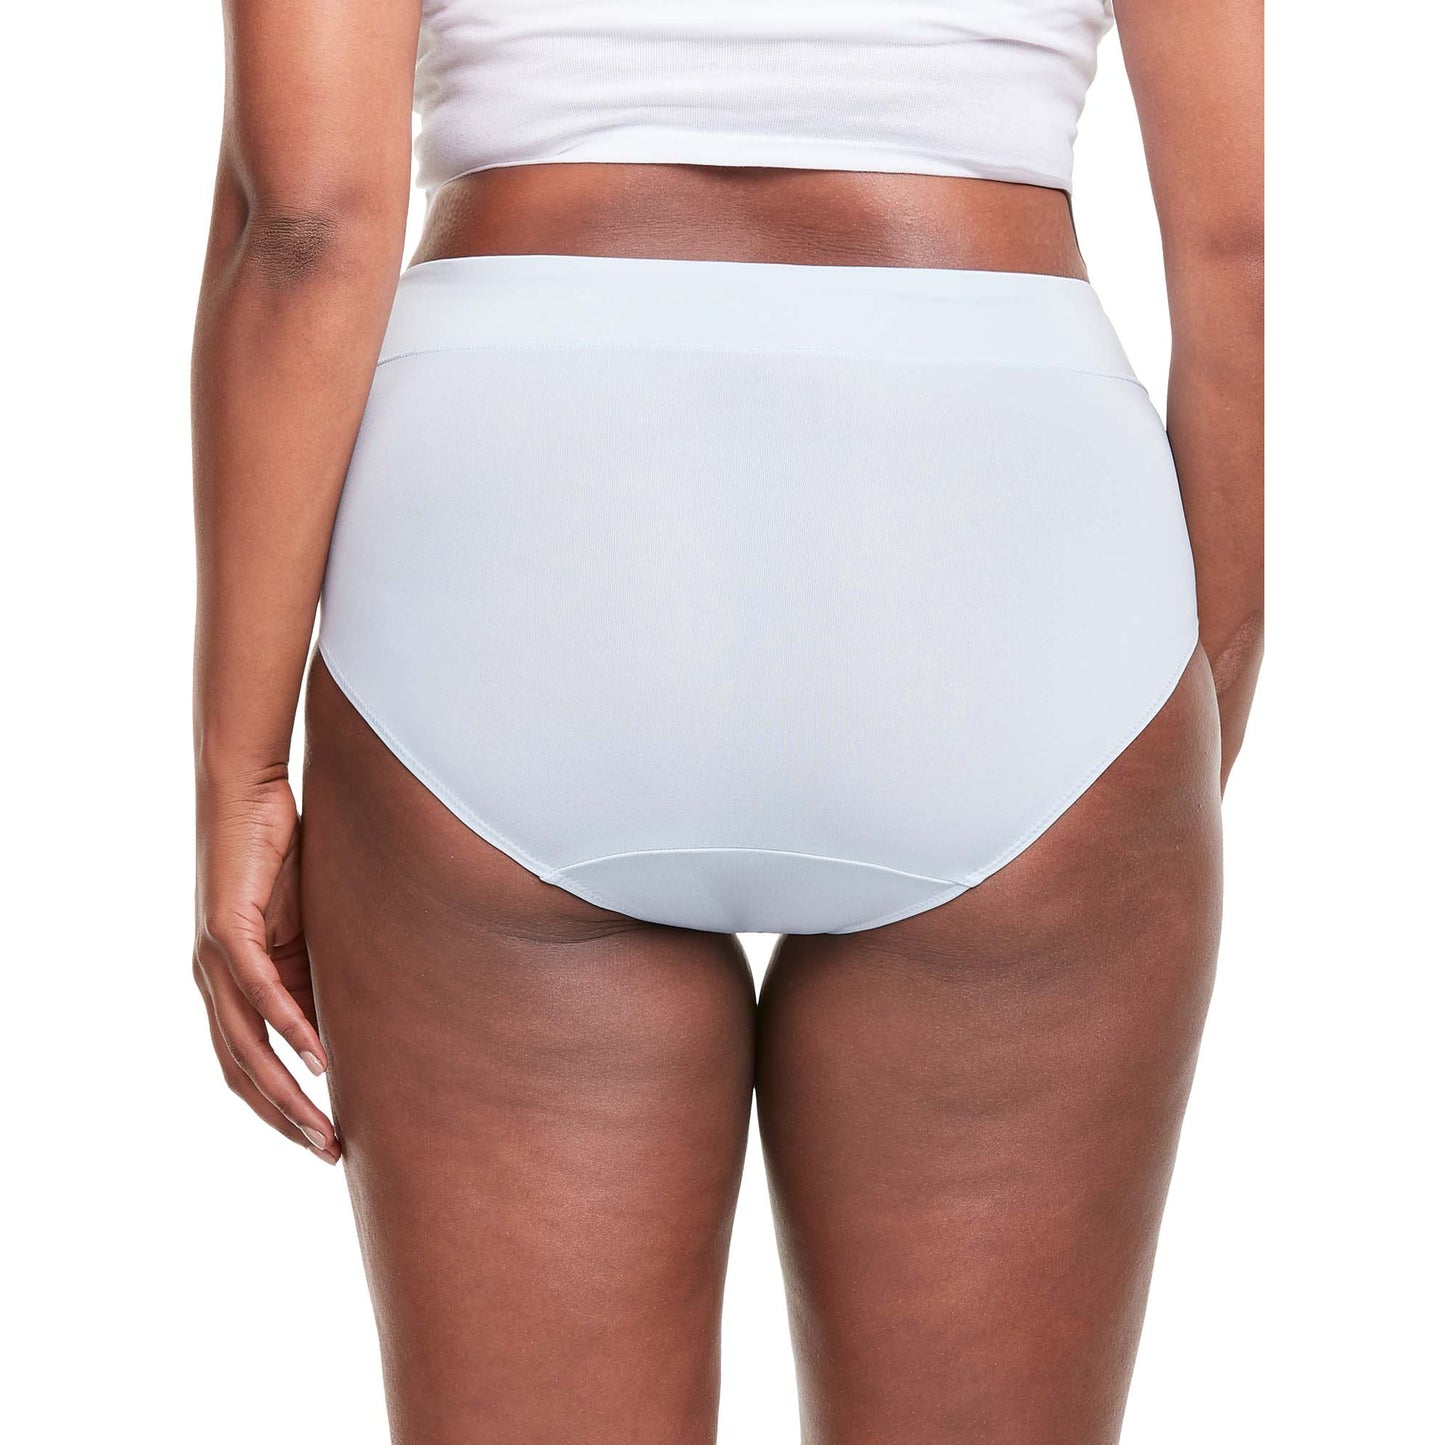 Hanes Womens Signature Smoothing Microfiber Brief Underwear, 6-Pack